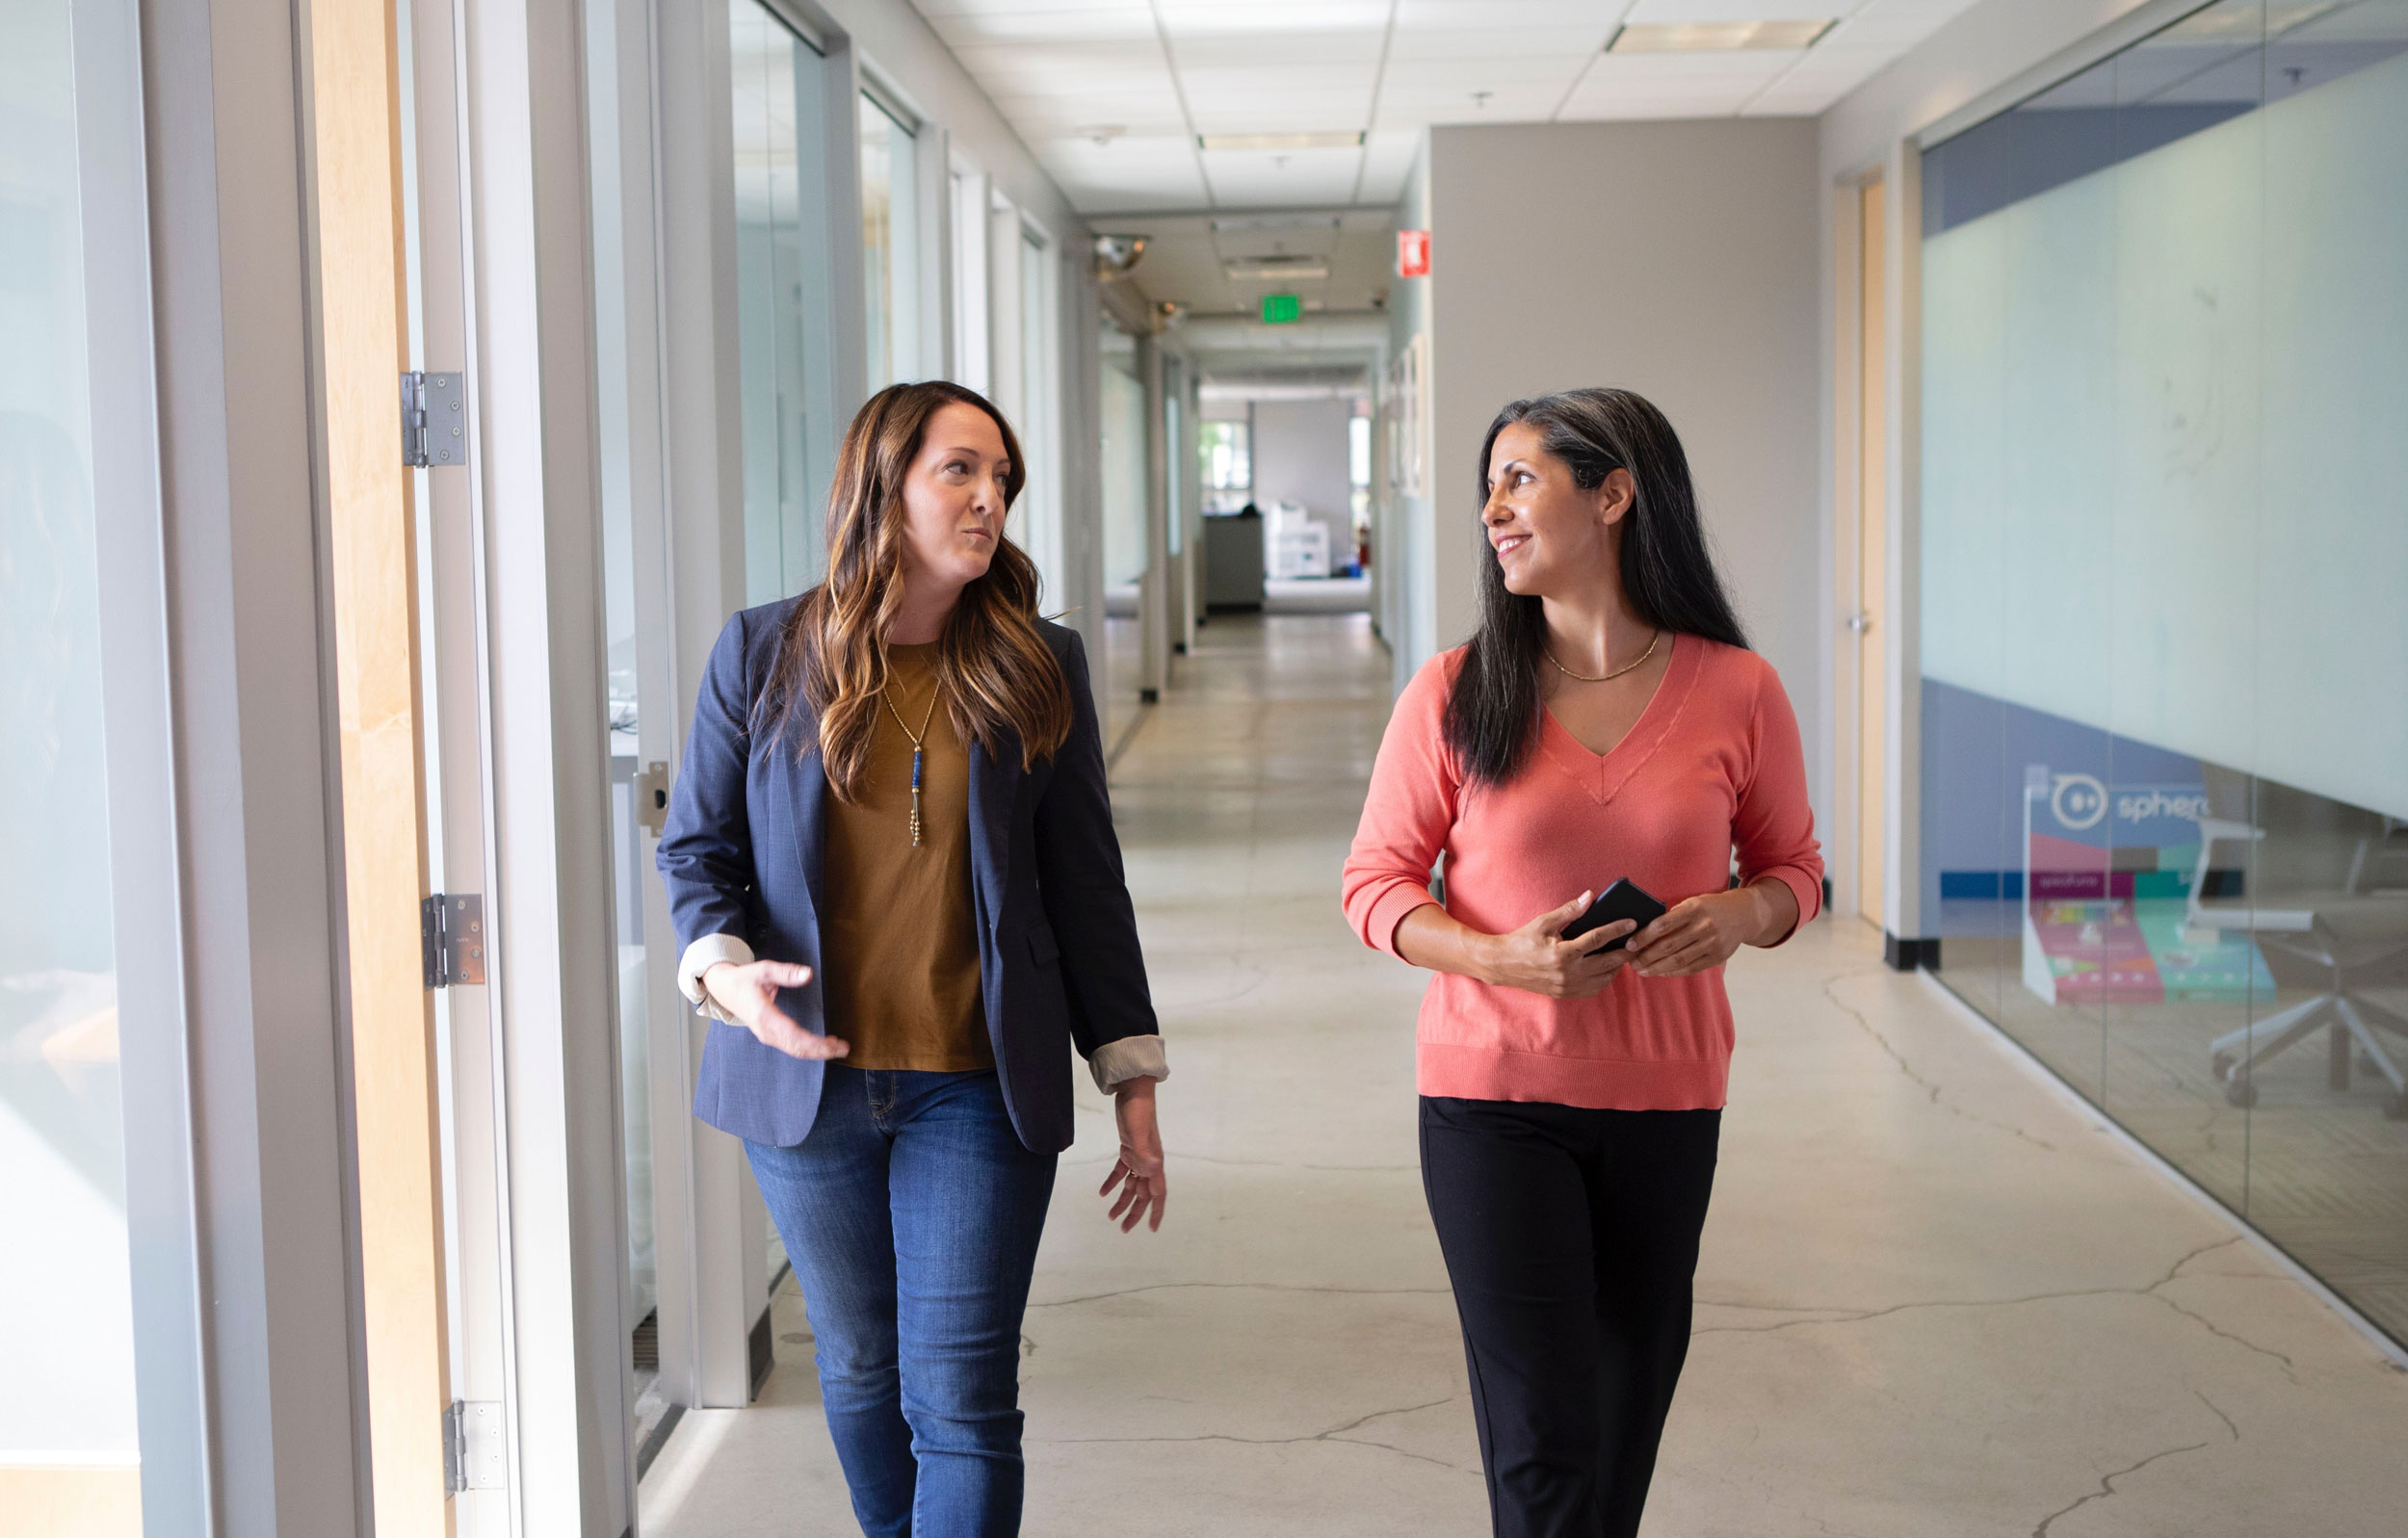 Professional women walking down a modern hallway